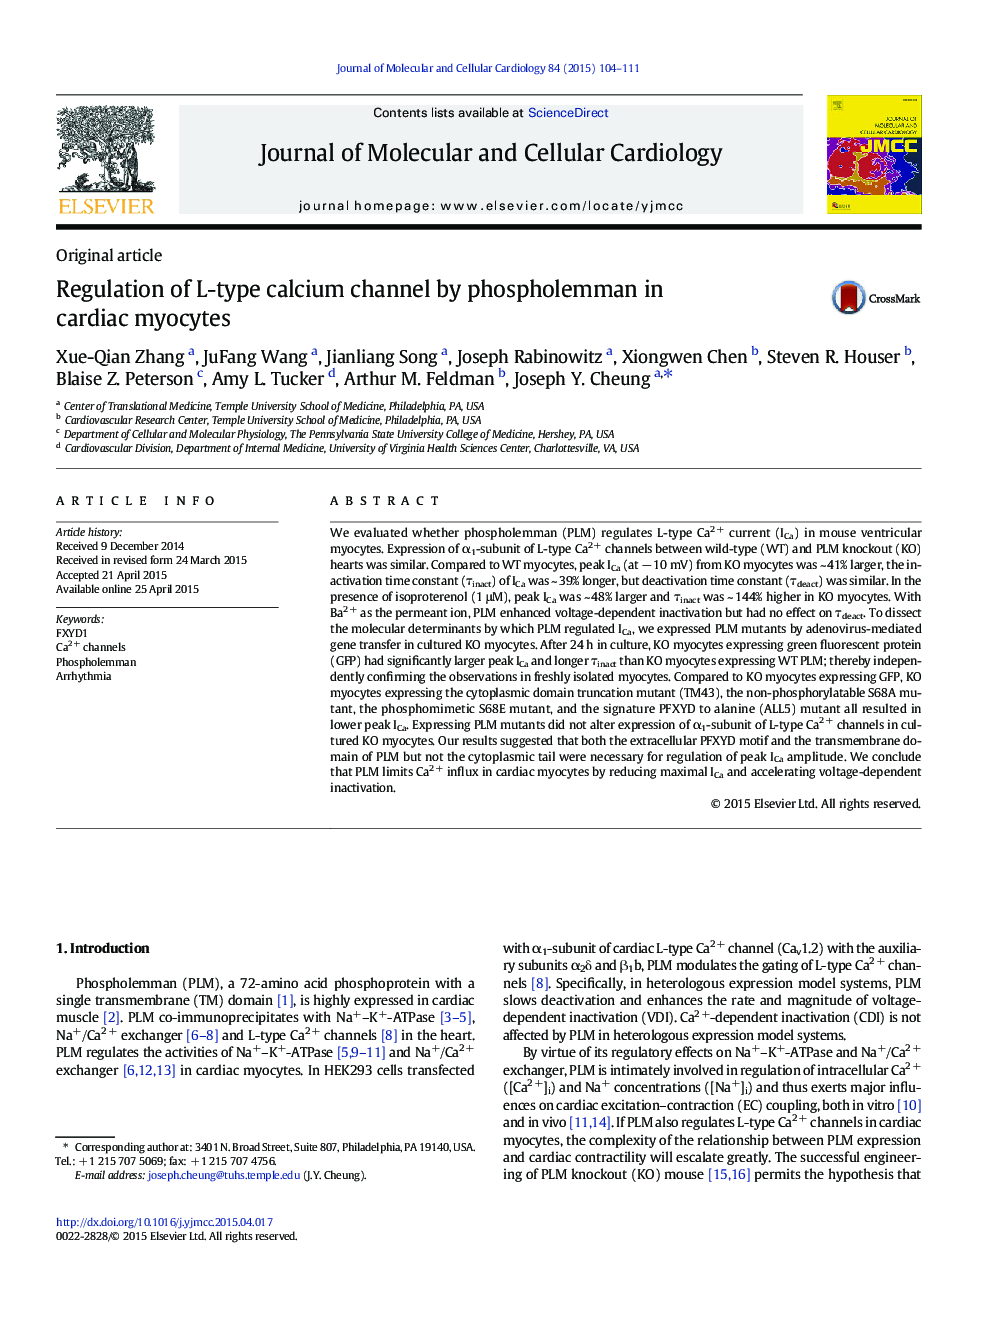 Regulation of L-type calcium channel by phospholemman in cardiac myocytes